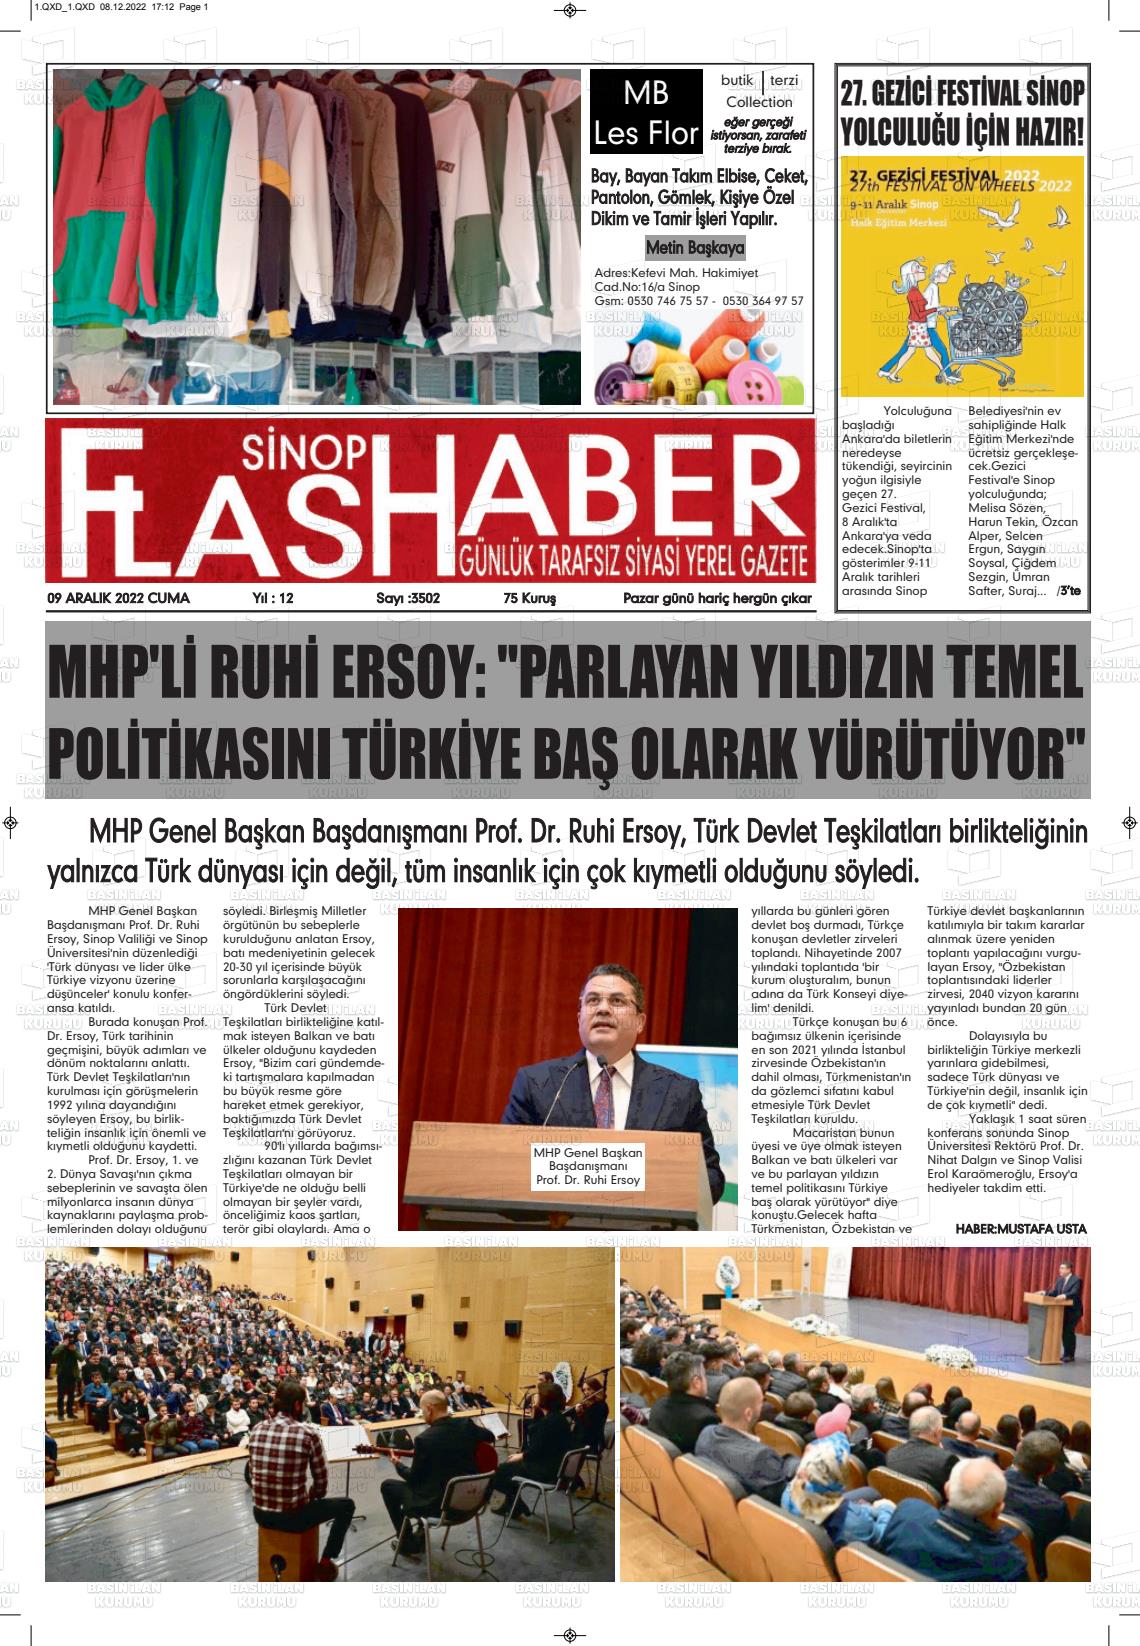 09 Aralık 2022 Sinop Flaş Haber Gazete Manşeti